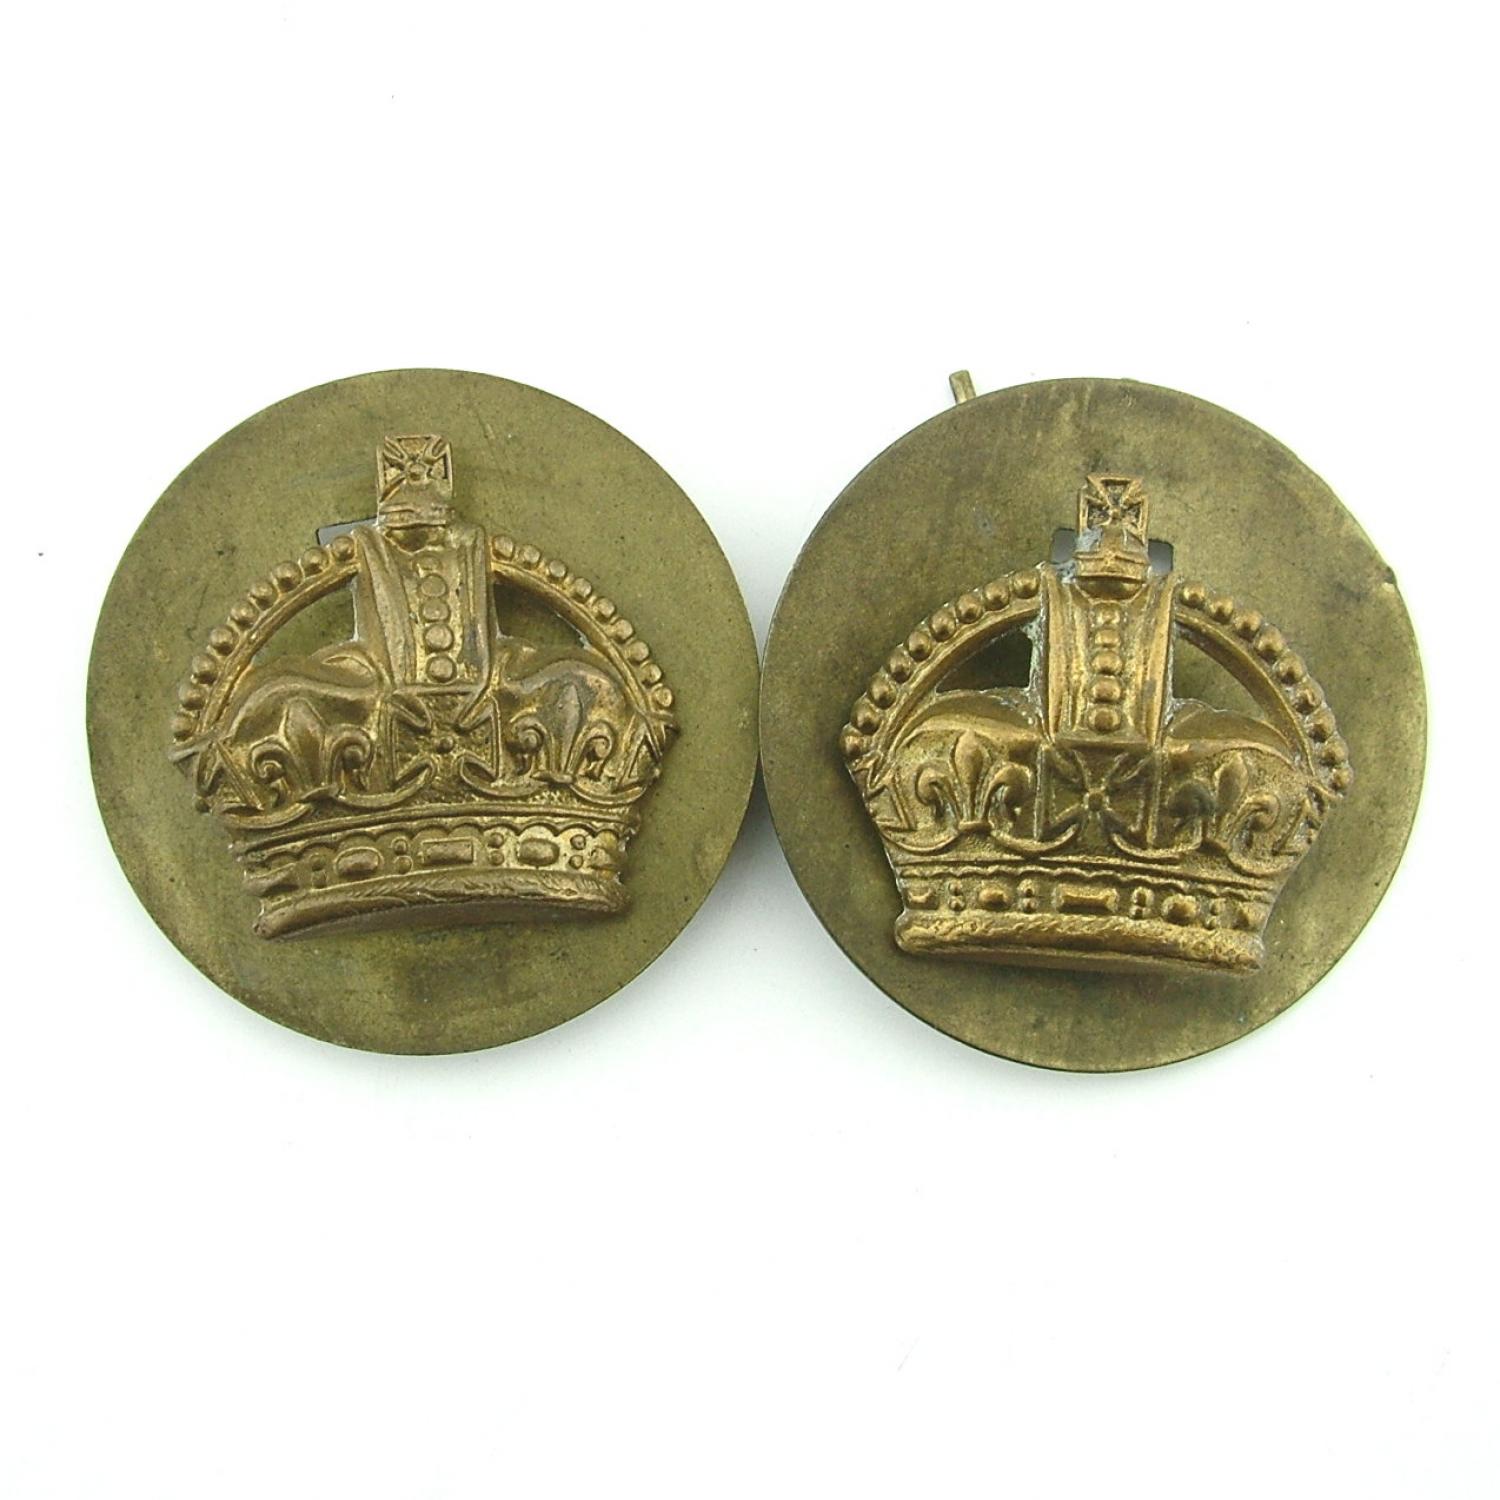 RAF flight sergeant crowns - pair